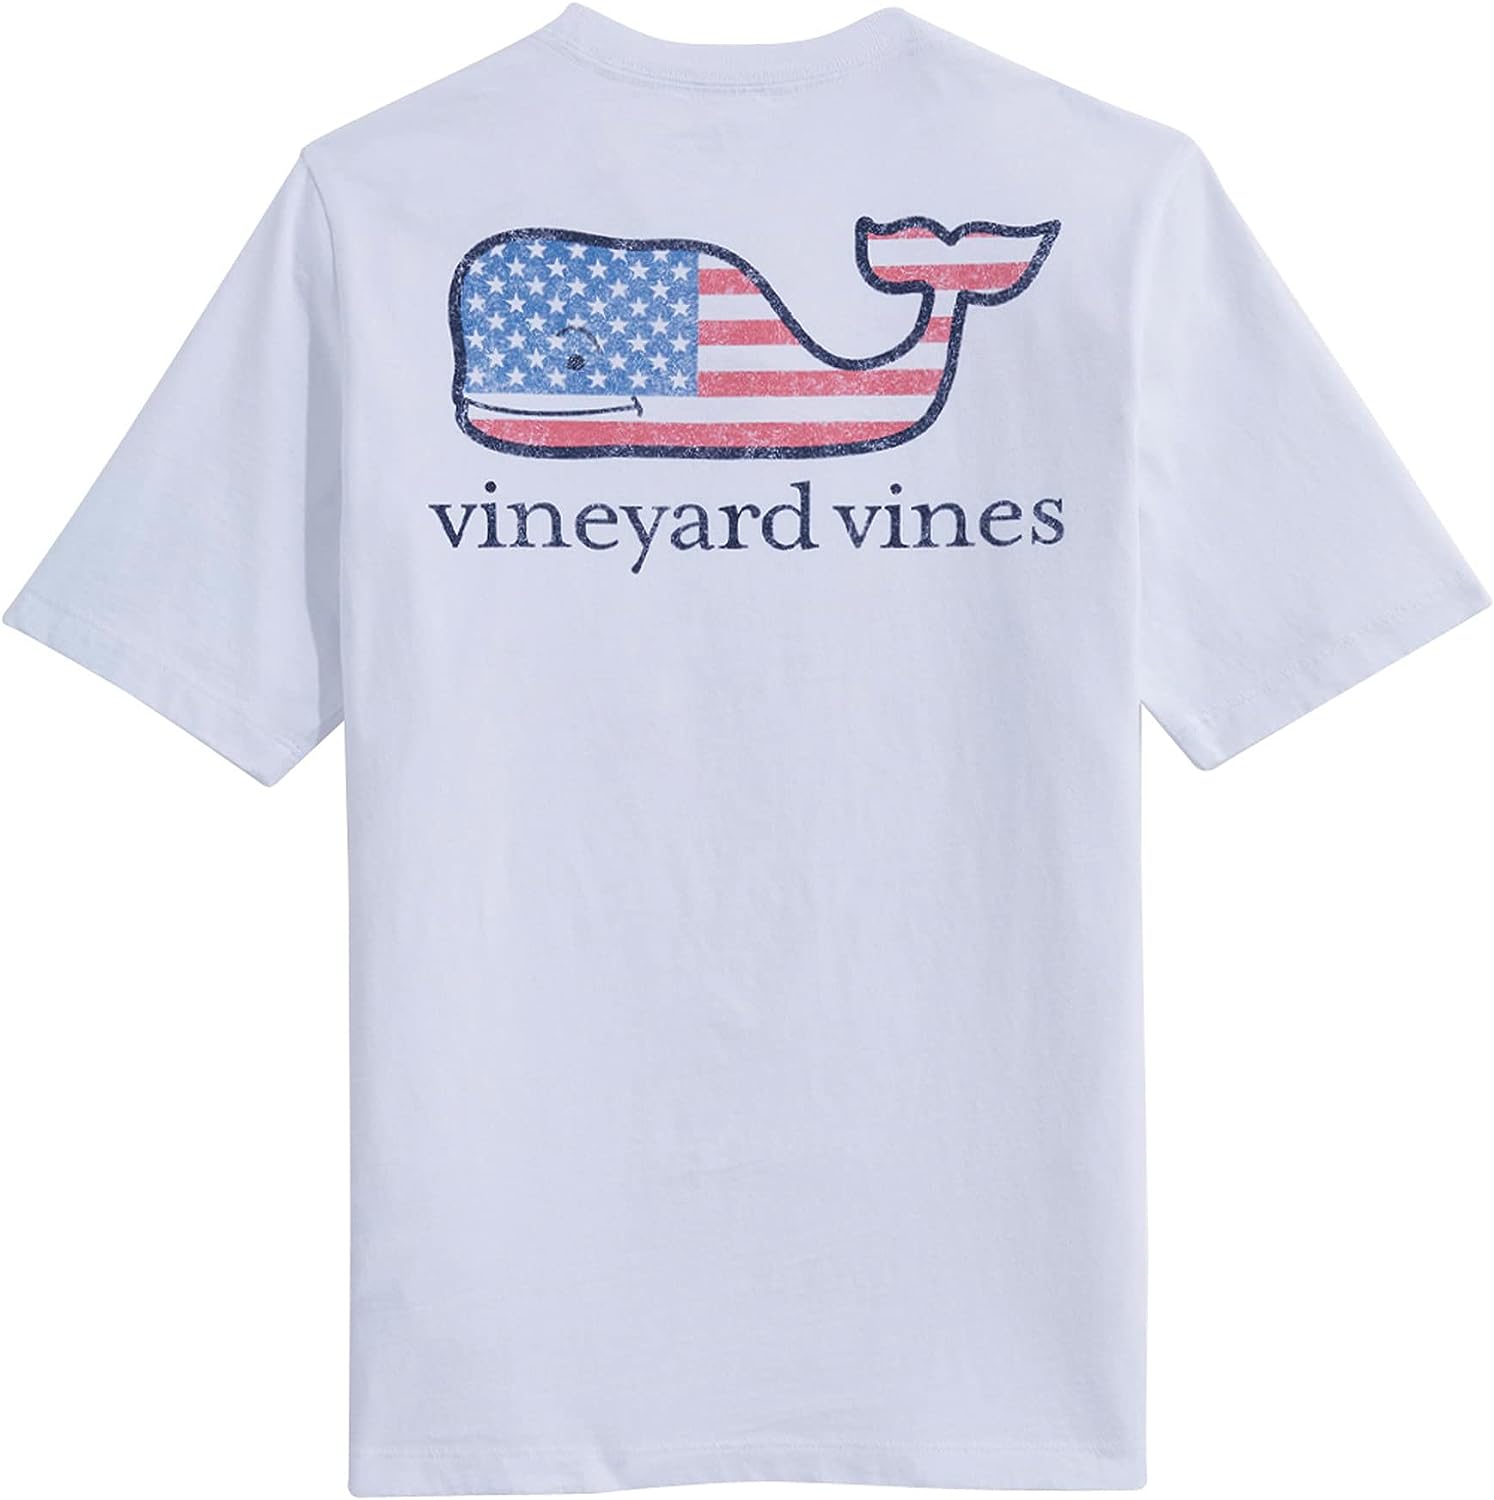 Shop Vineyard Vines Shirt online